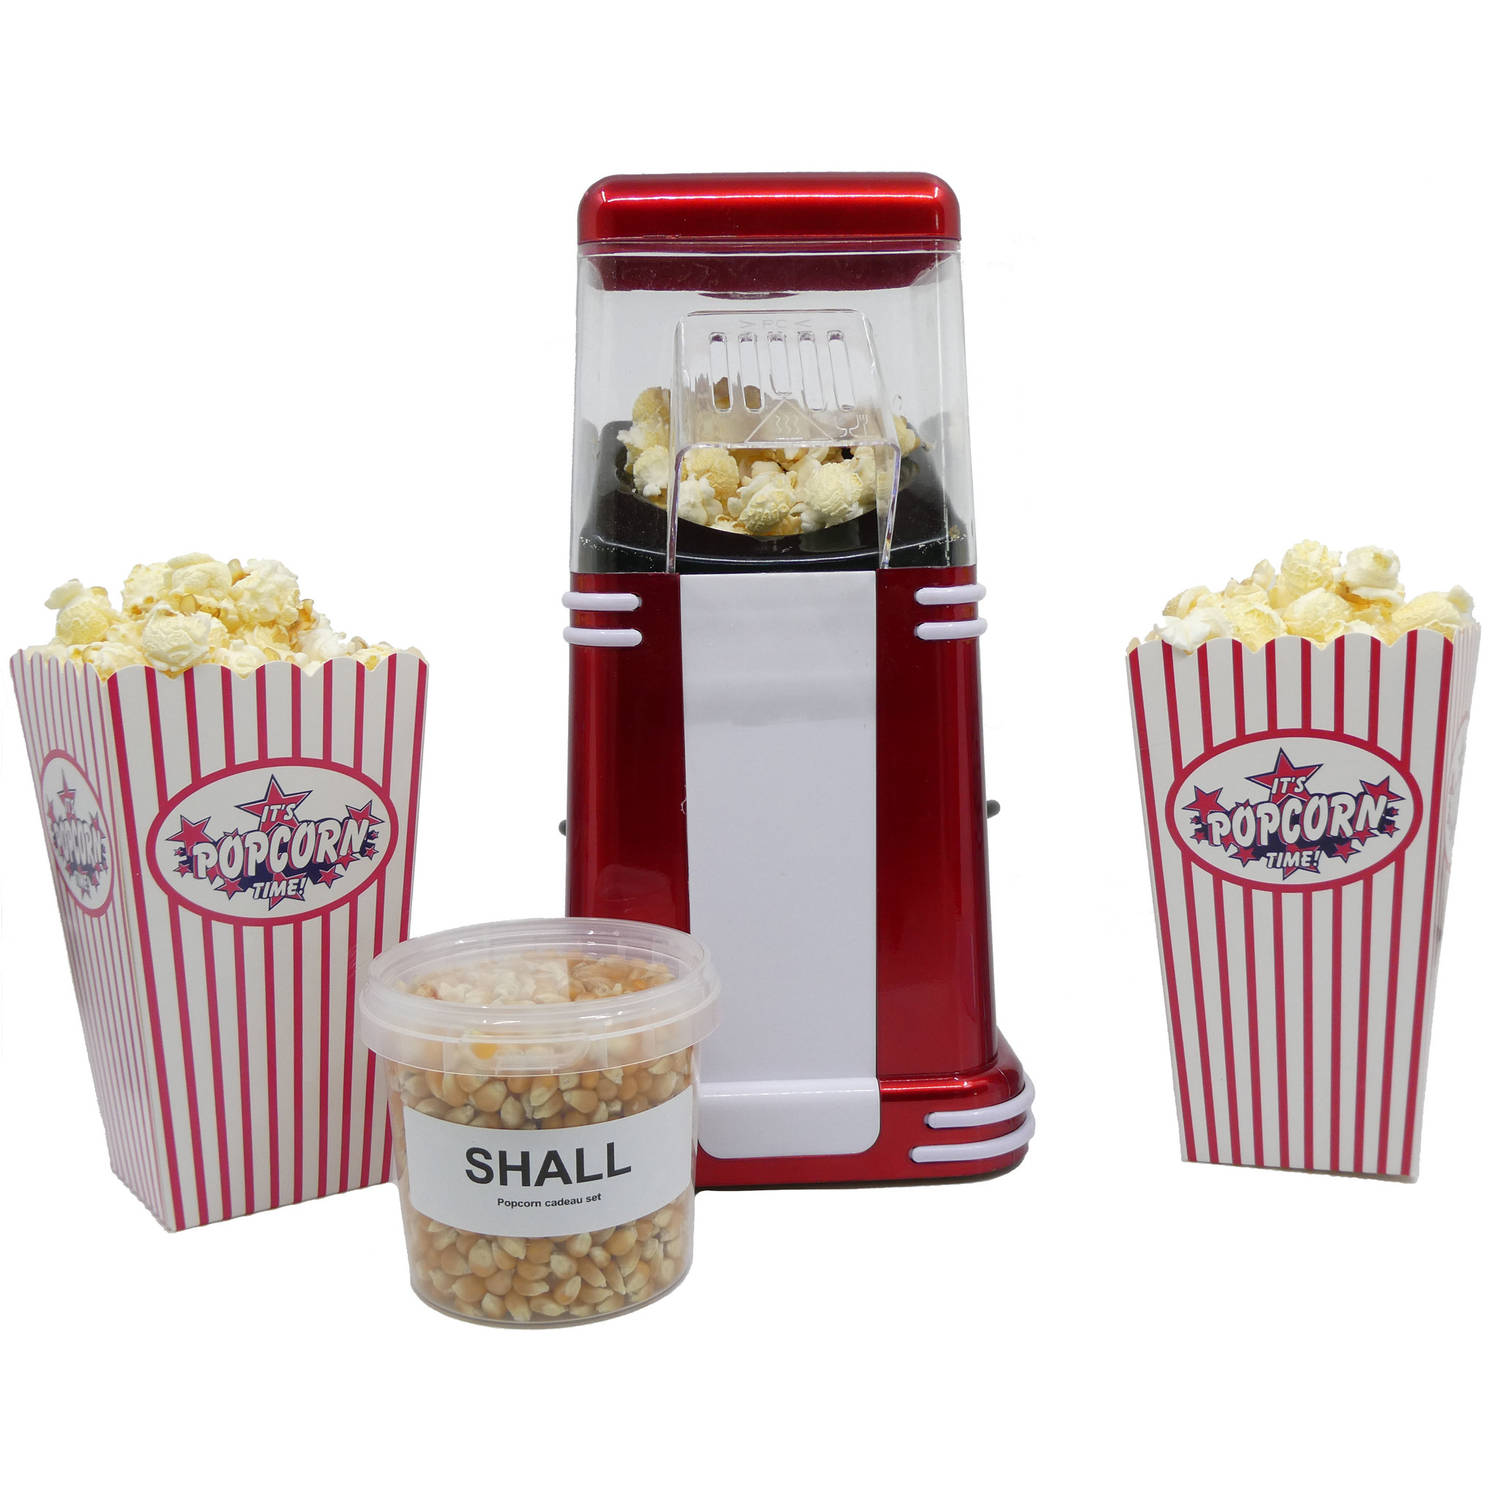 Popcornmachine rood met wit retro model - cadeau set